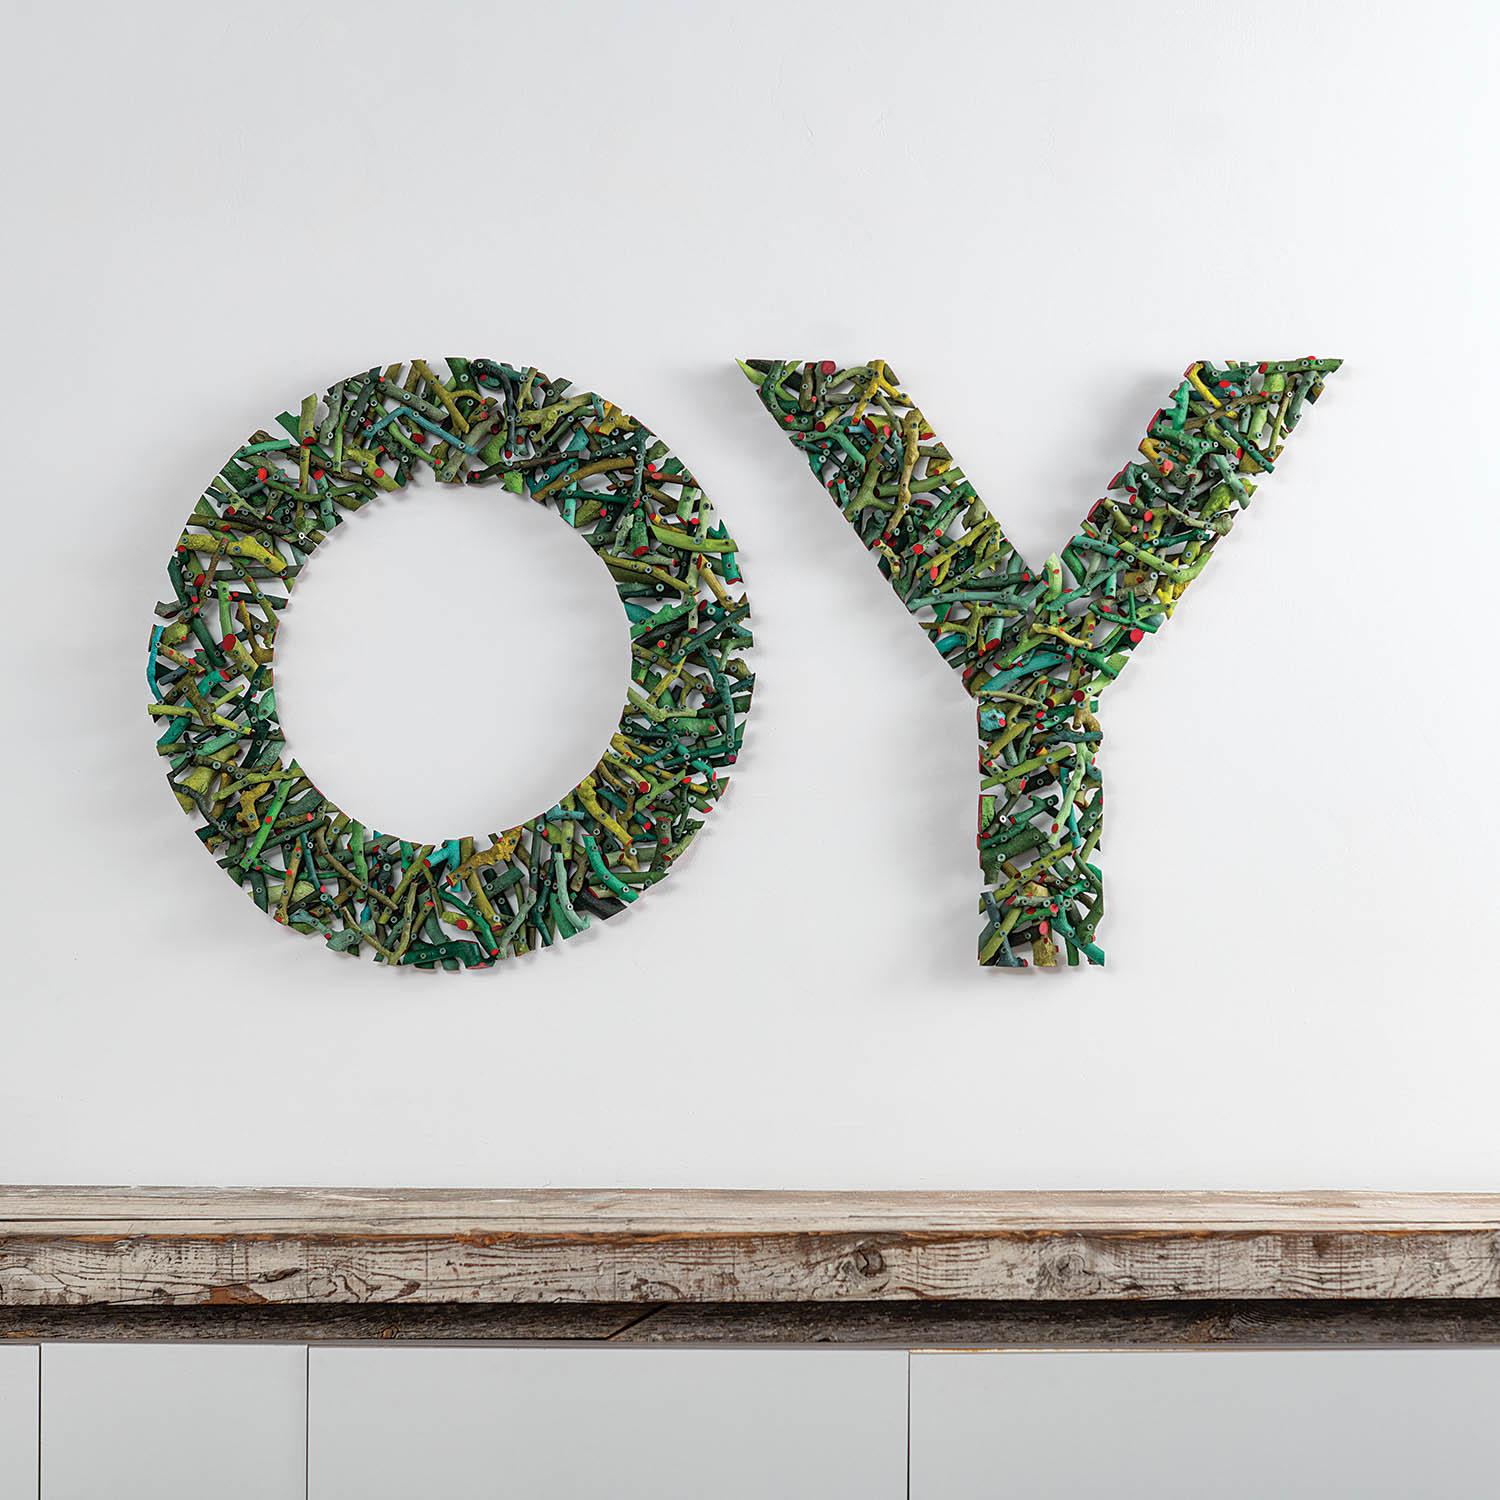 "Deviation (OY)" Gyöngy Laky, Contemporary Mixed Media Textual Sculpture